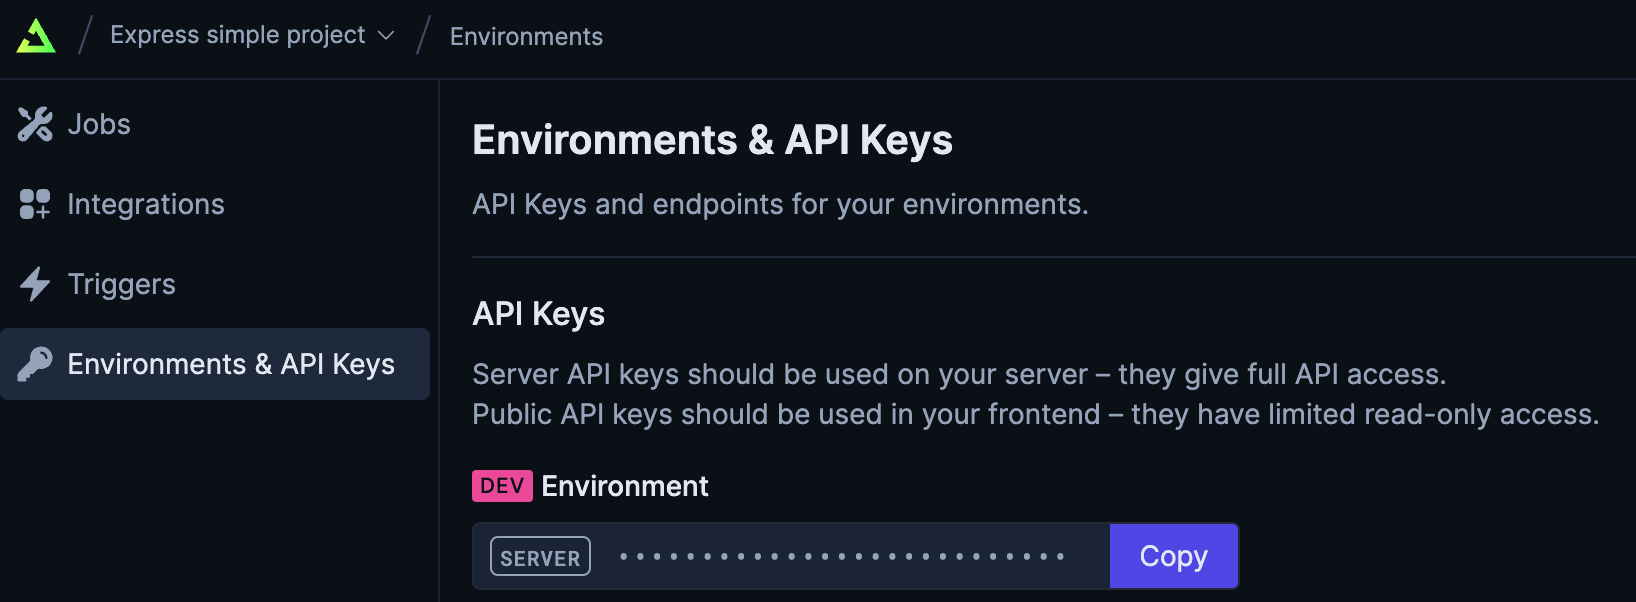 trigger.dev environment and API keys